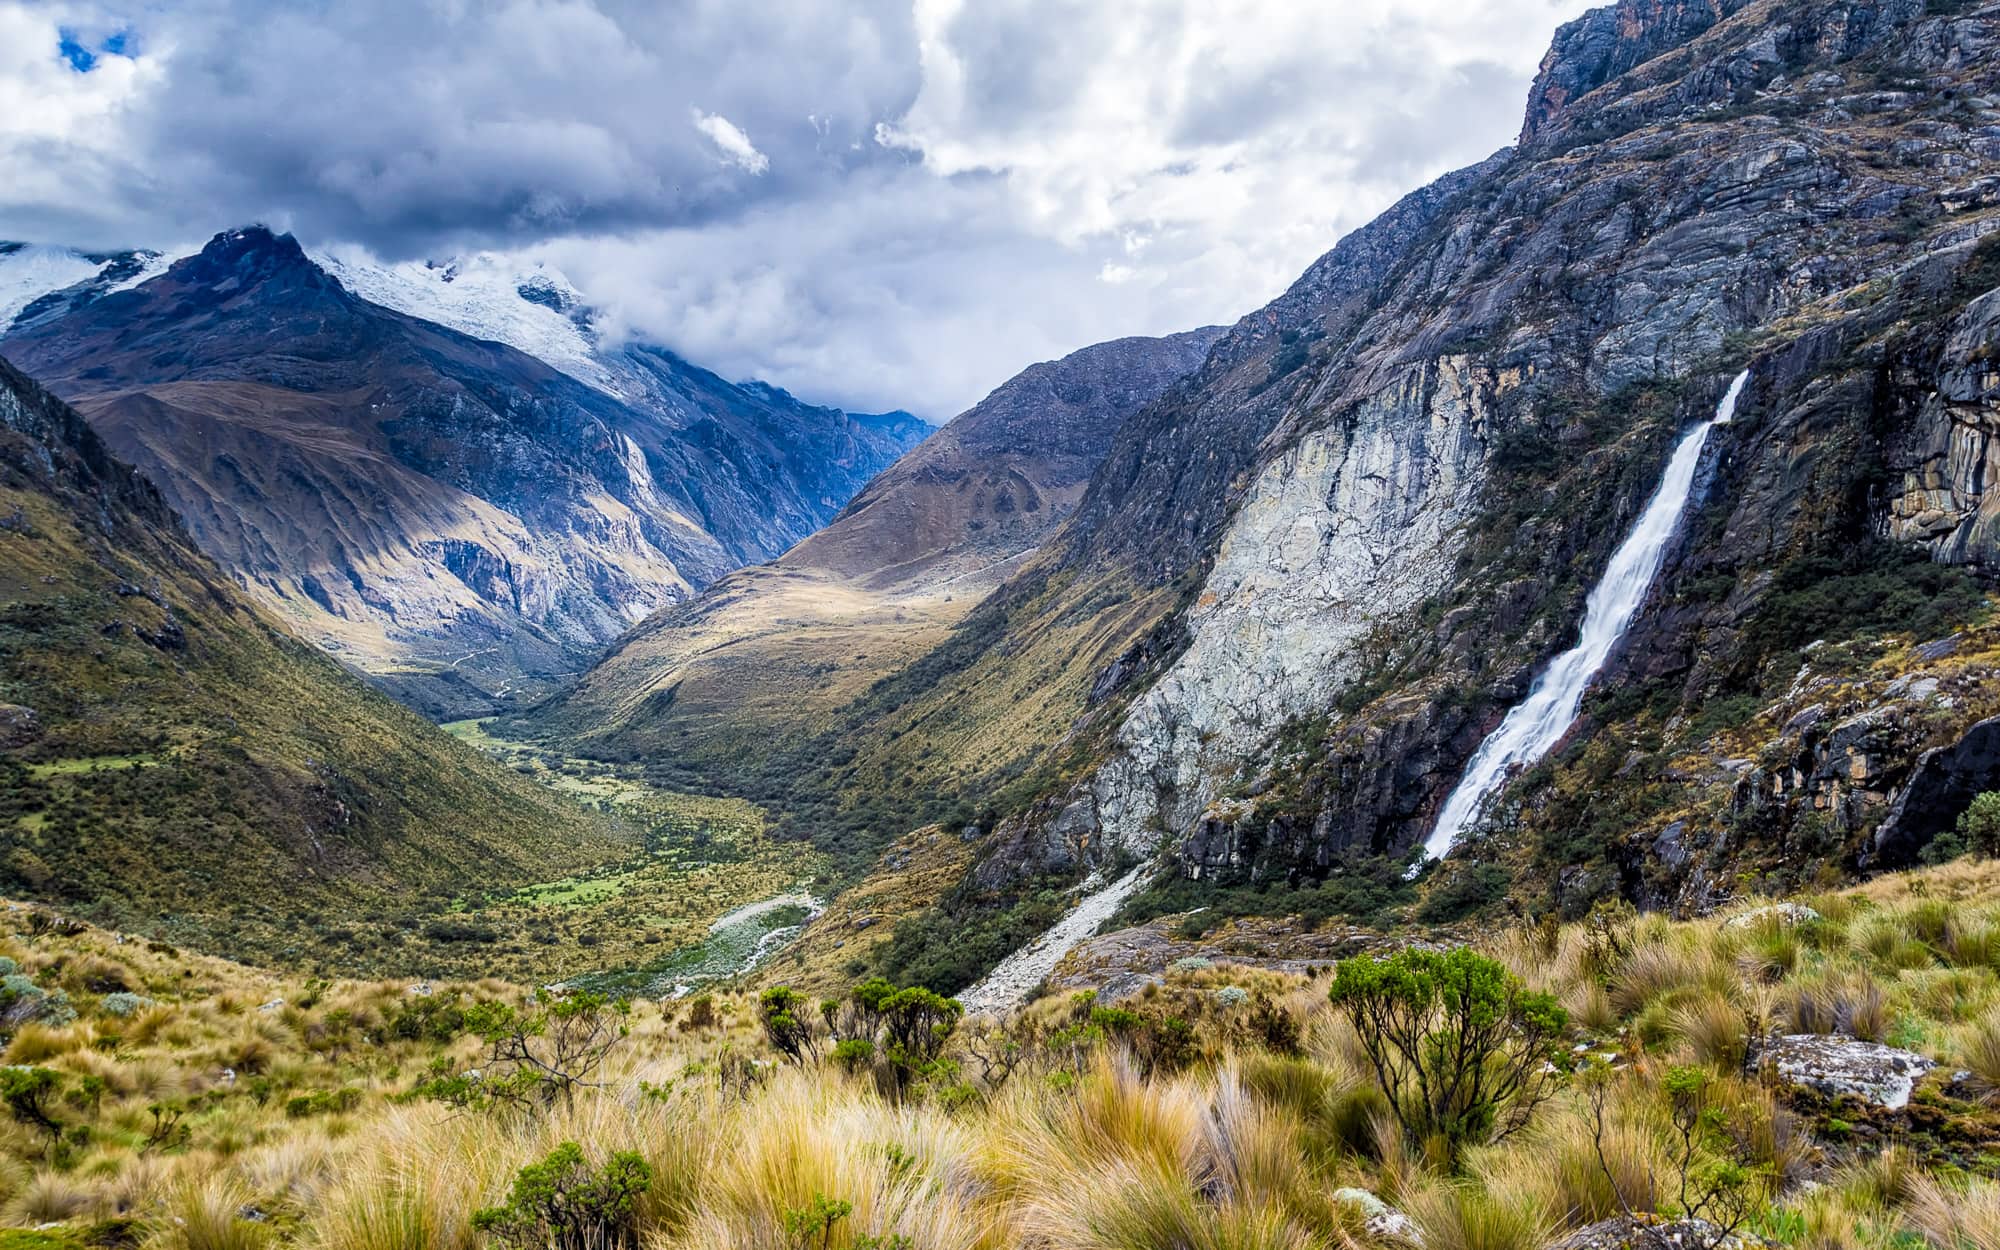 The Andes, Cordillera Blanca